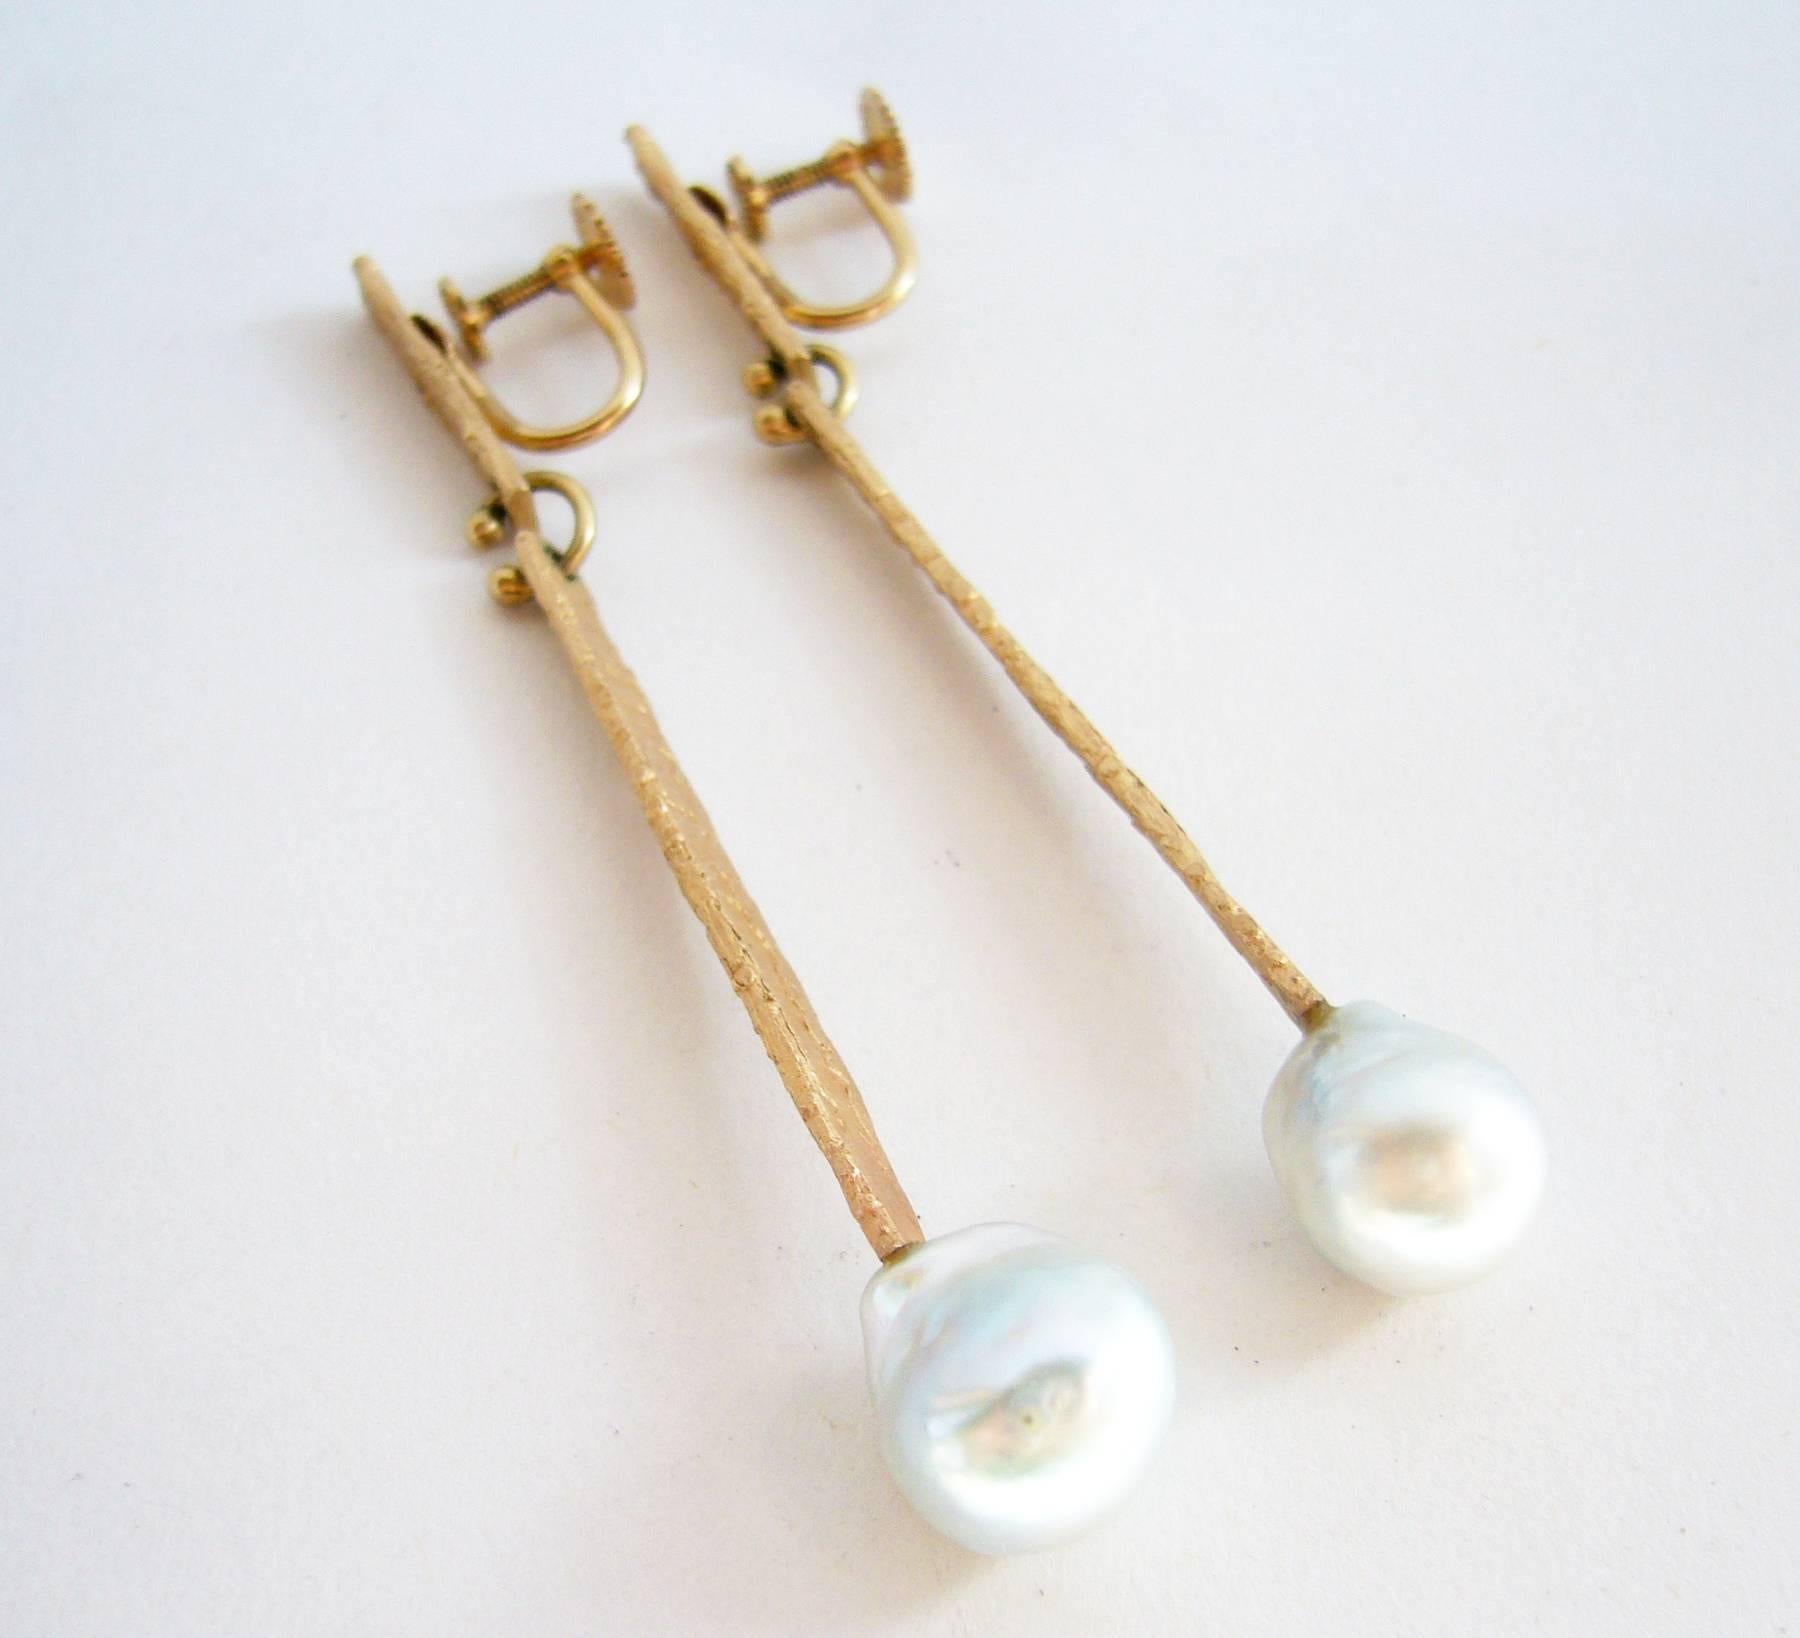 Textured 14k gold and grey mabé pearl earrings created by Ed Wiener of New York. Earrings measure 3